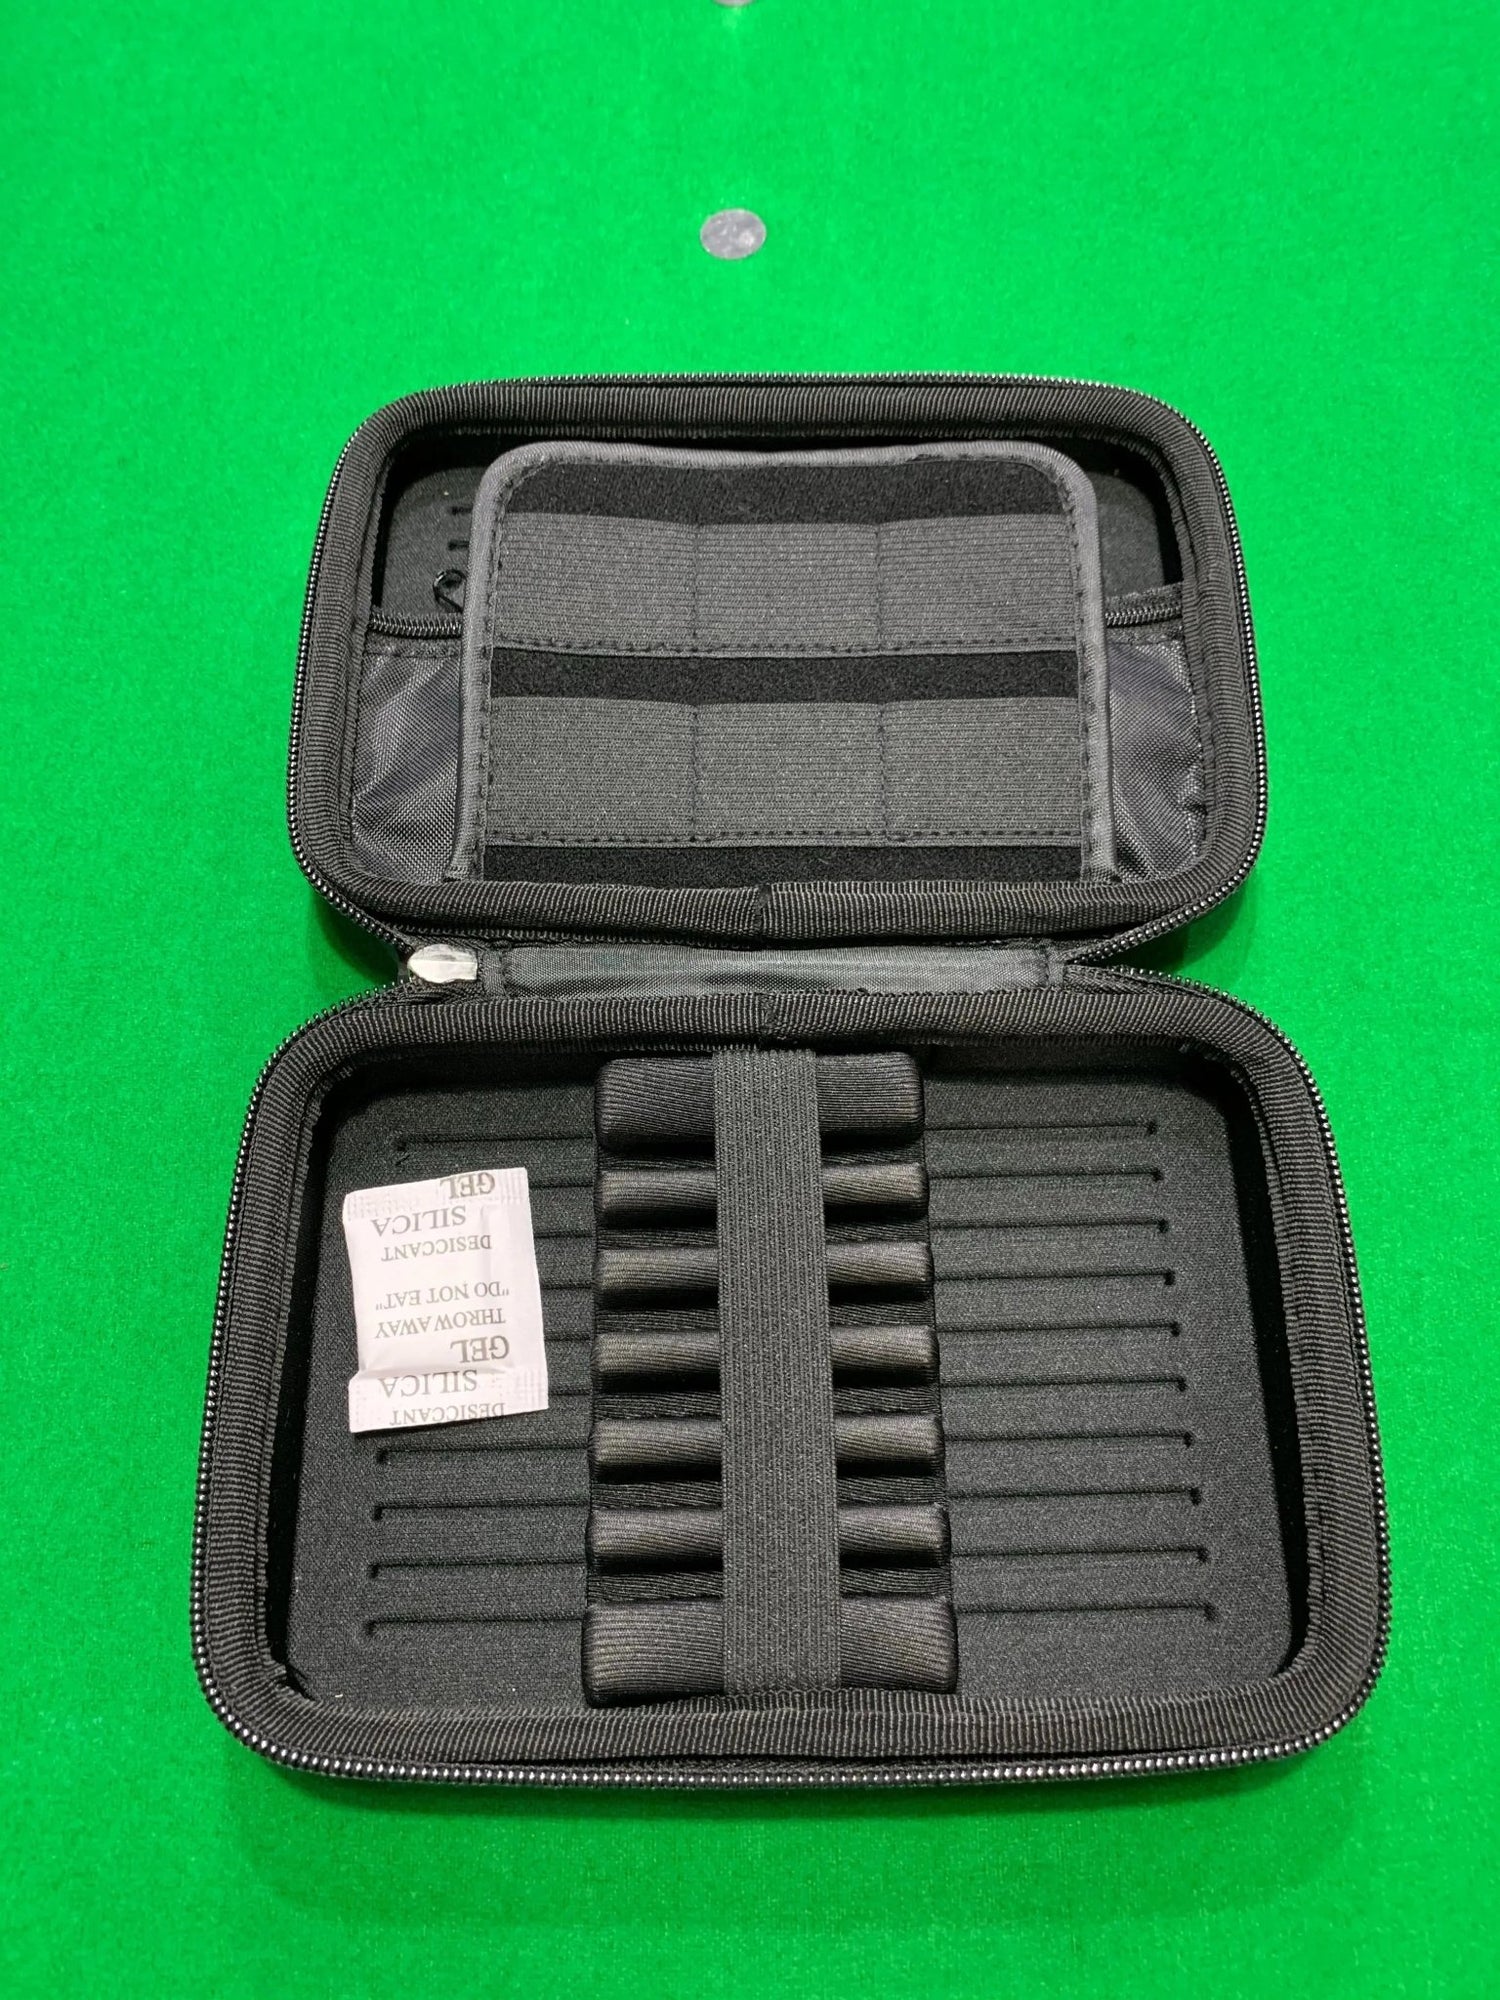 Target Takoma XL Dart Case Holds 2 Full Sets - Black - Q-Masters